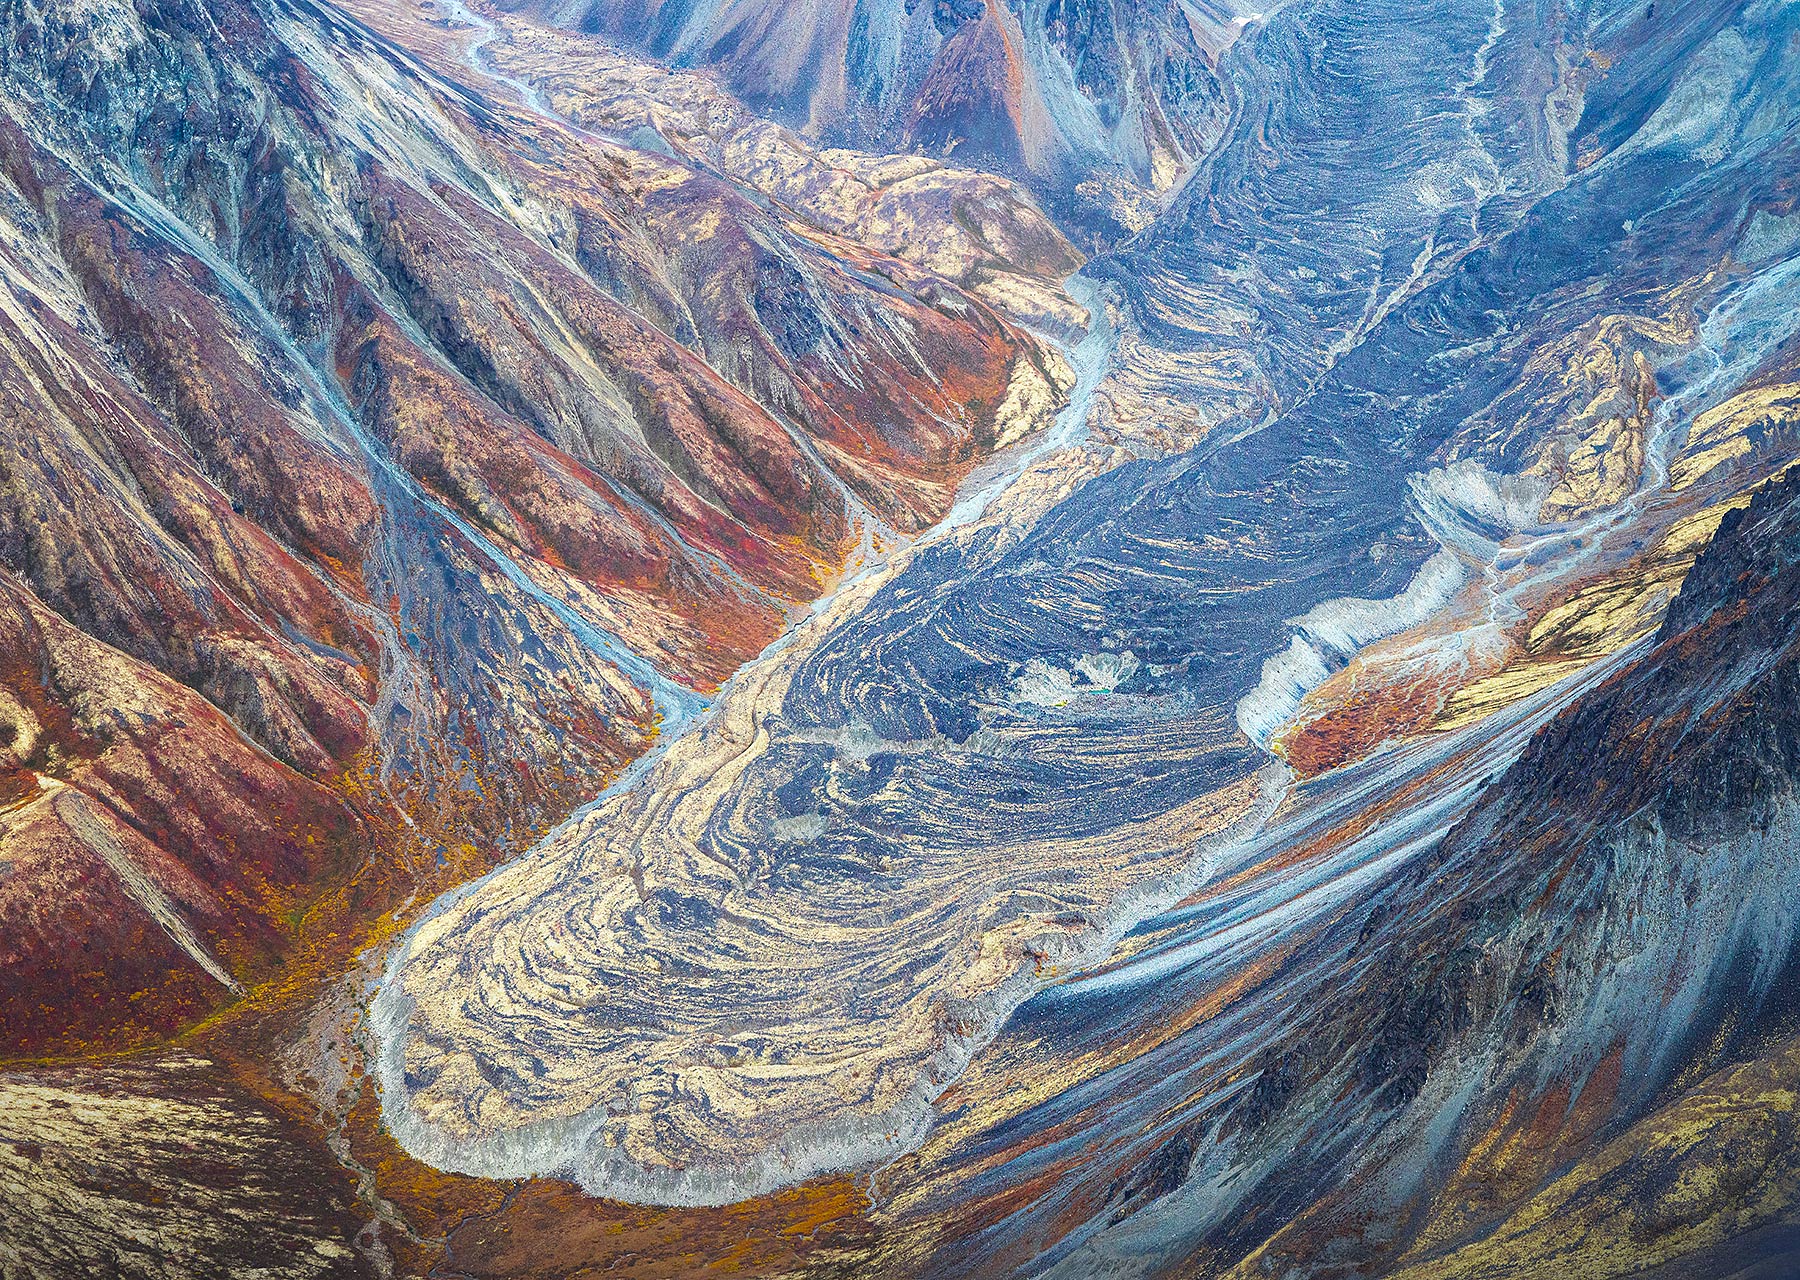 A "rock glacier" in Alaska dressed in fall colors.